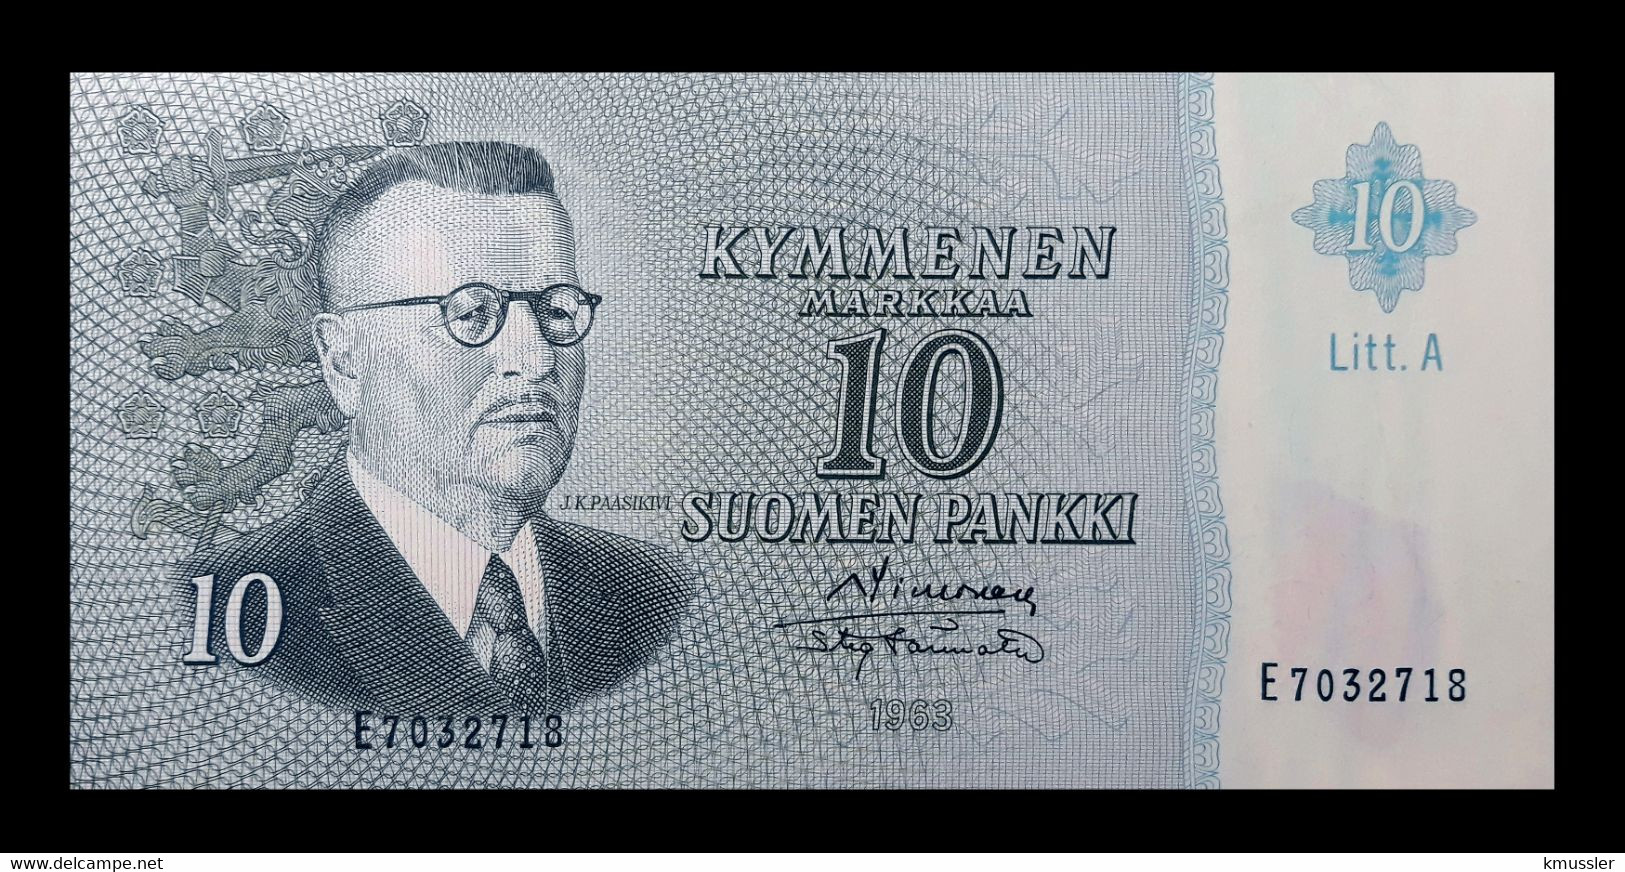 # # # Banknote Finnland (Finland) 10 Markkaa 1963 Lit. A UNC # # # - Finlandia